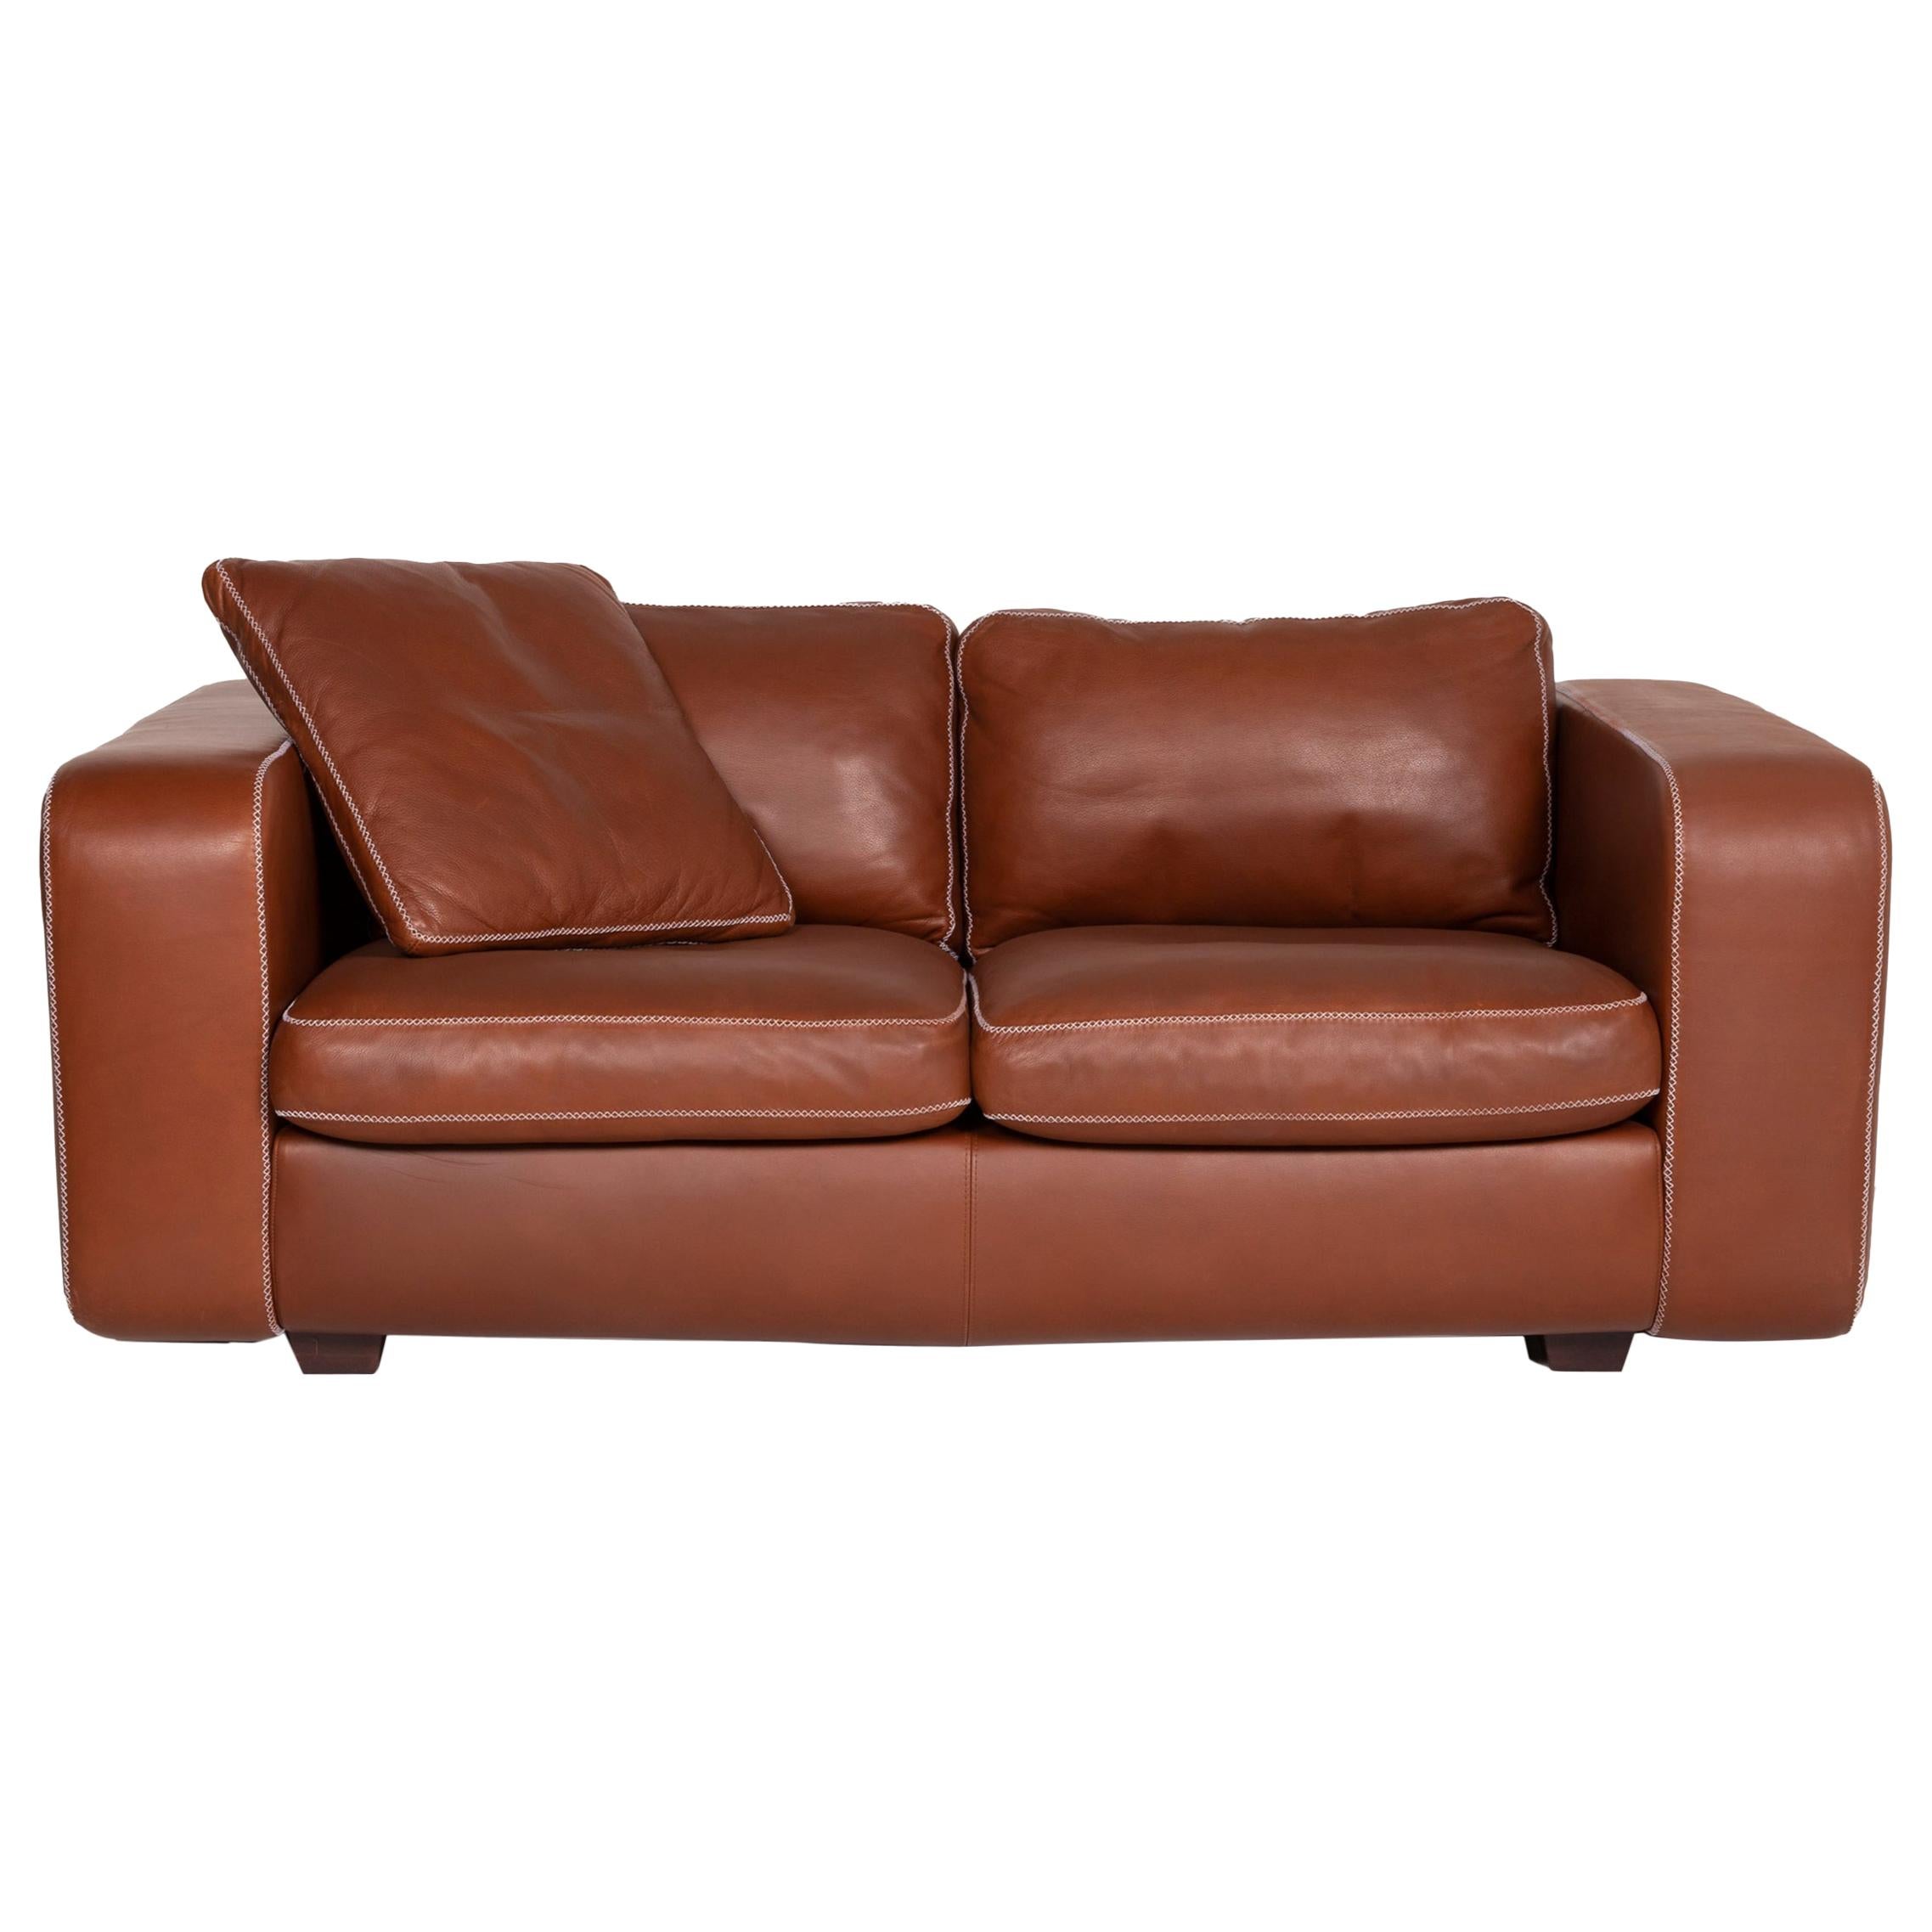 Machalke Valentino Leather Sofa Brown Two-Seater